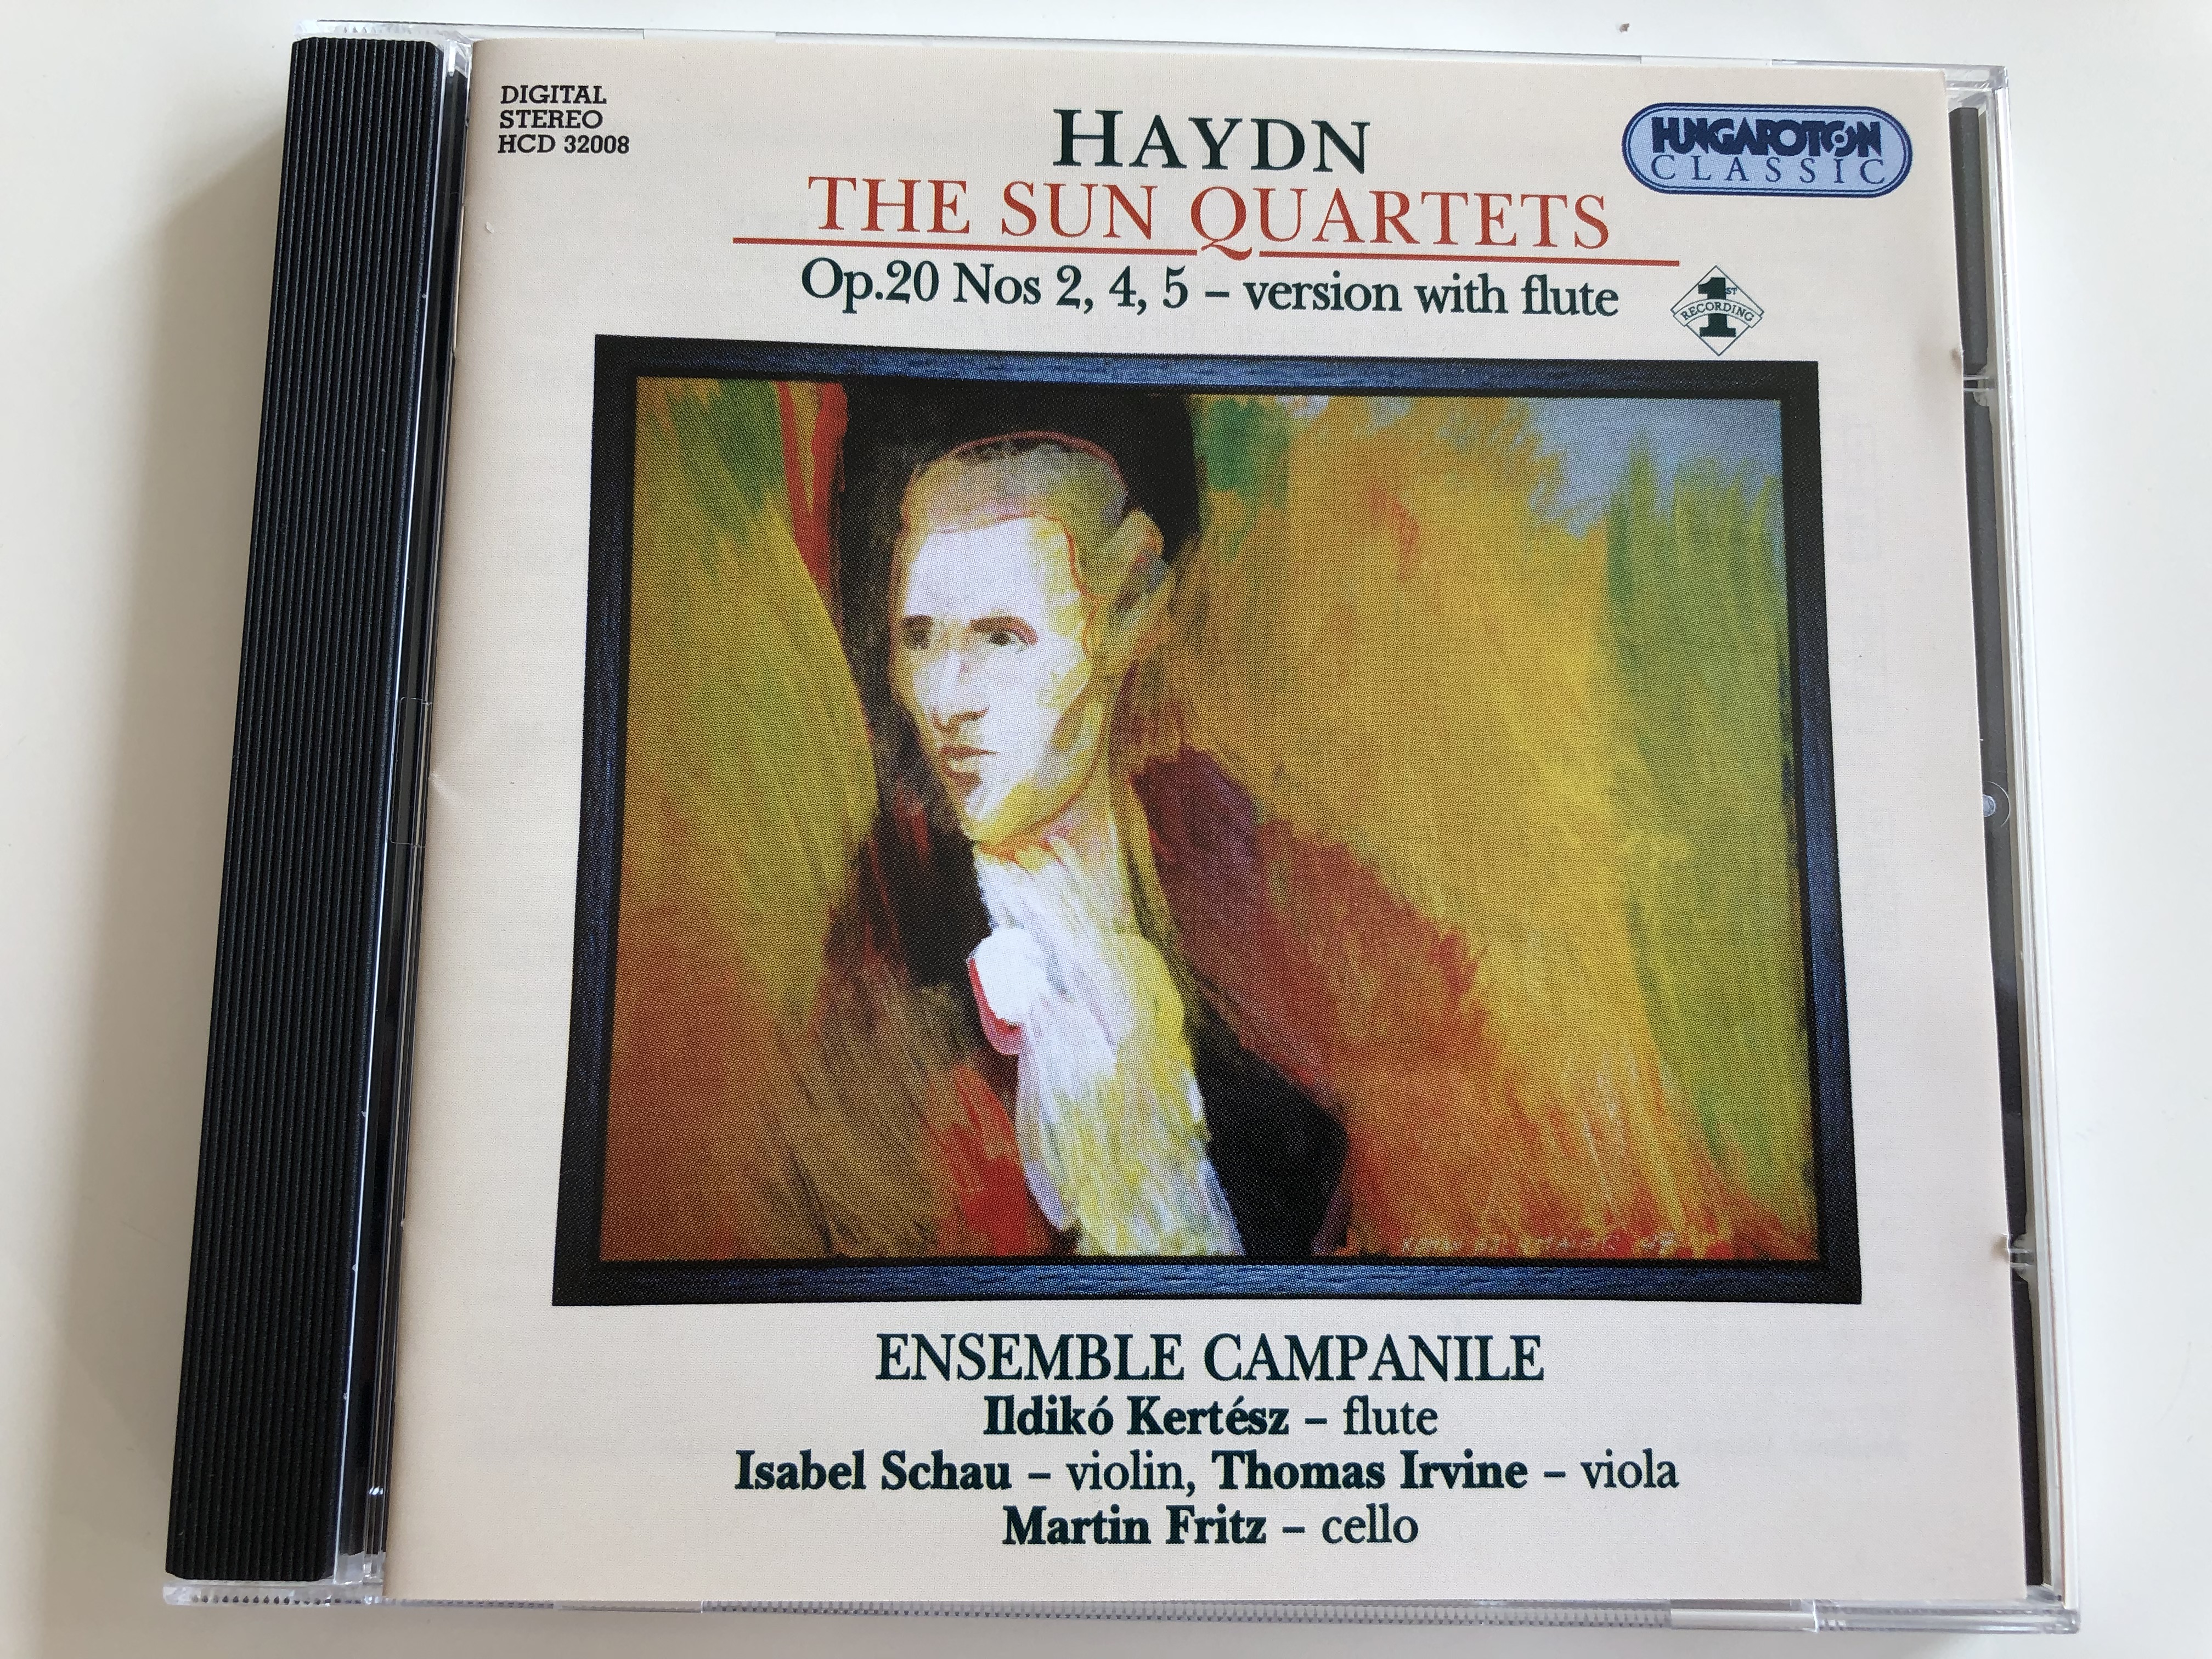 haydn-the-sun-quartets-op.-20-nos-2-4-5-version-with-flute-ensemble-campanile-ildik-kert-sz-flute-isabel-schau-violin-thomas-irvine-viola-martin-fritz-cello-hungaroton-classic-hcd-32008-audio-cd-2001-1-.jpg